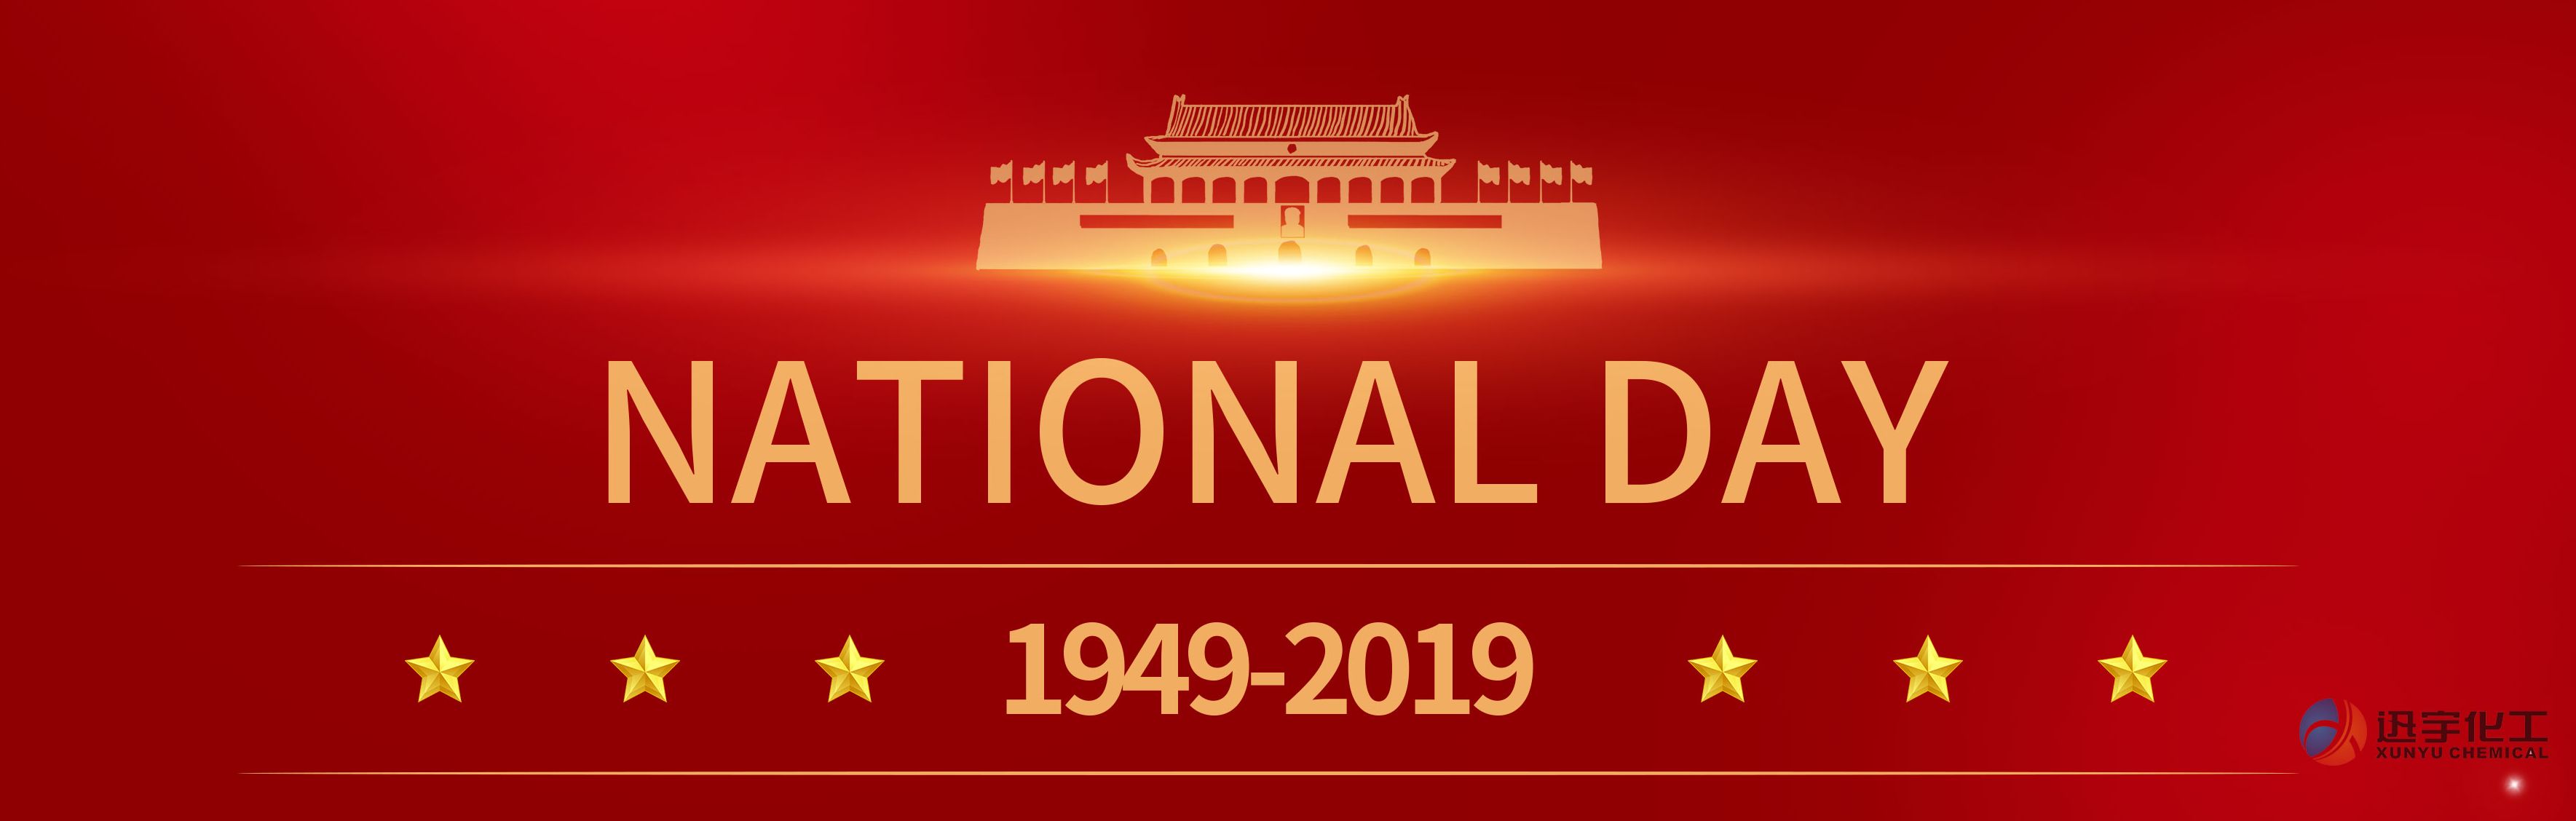 Happy China National Day 2019